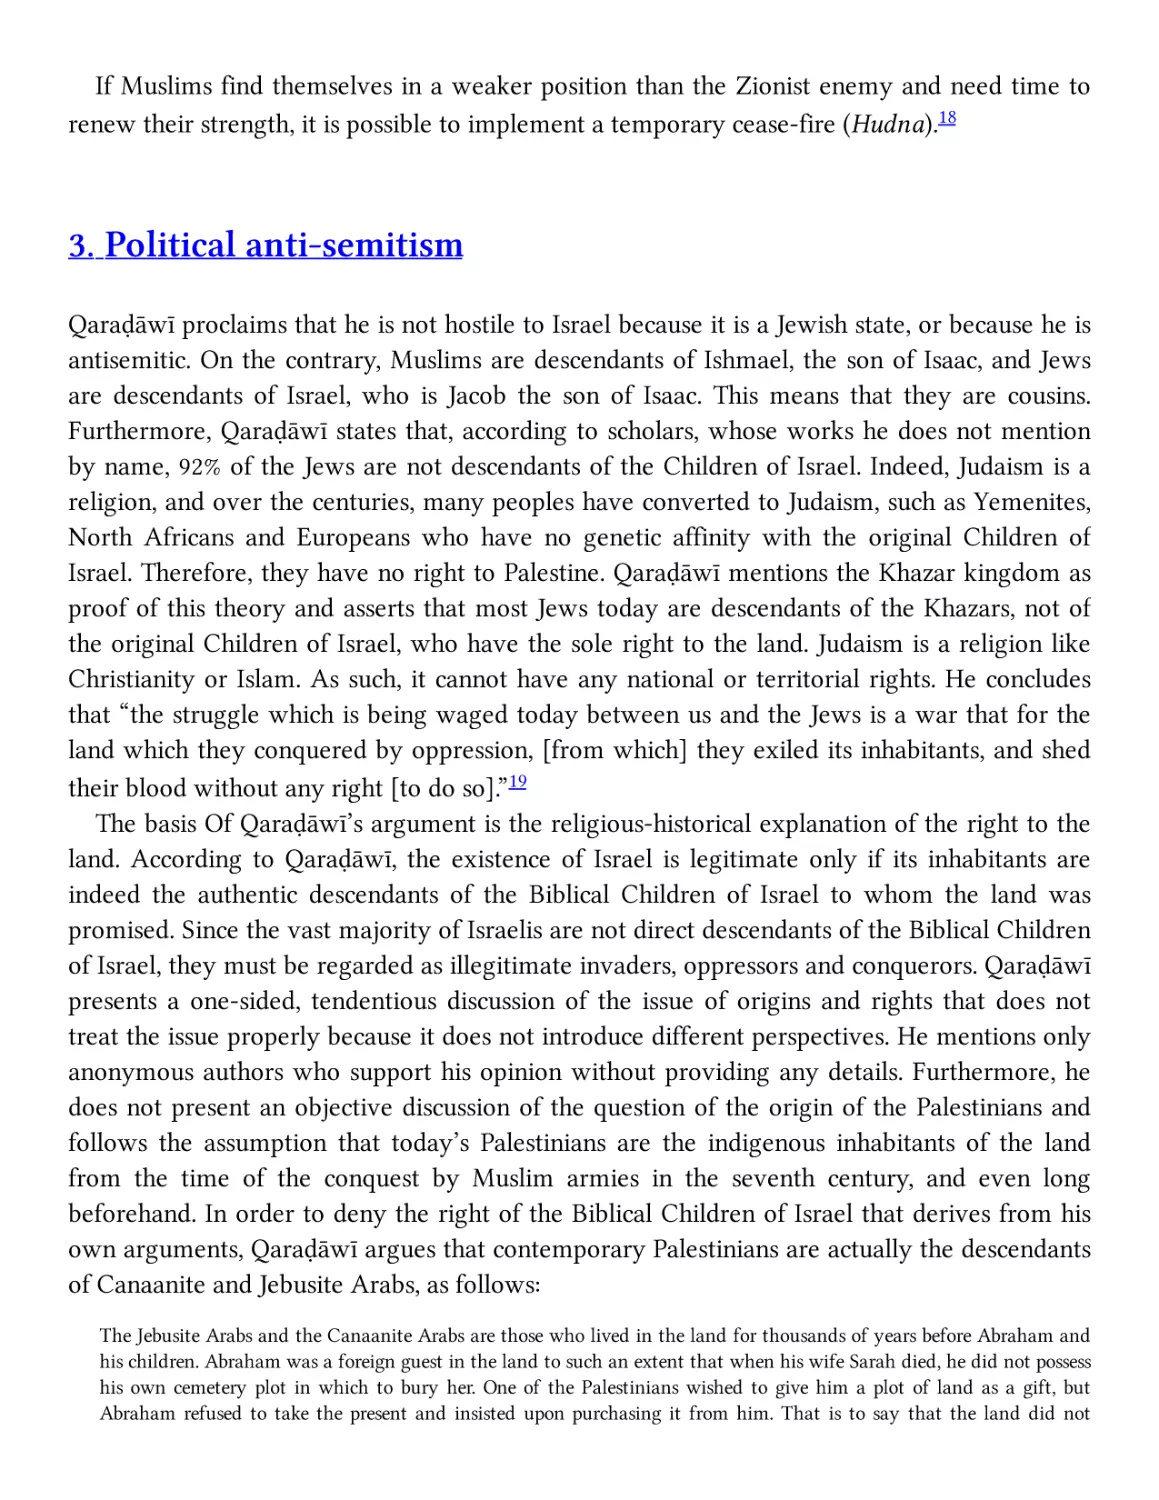 3. Political anti-semitism